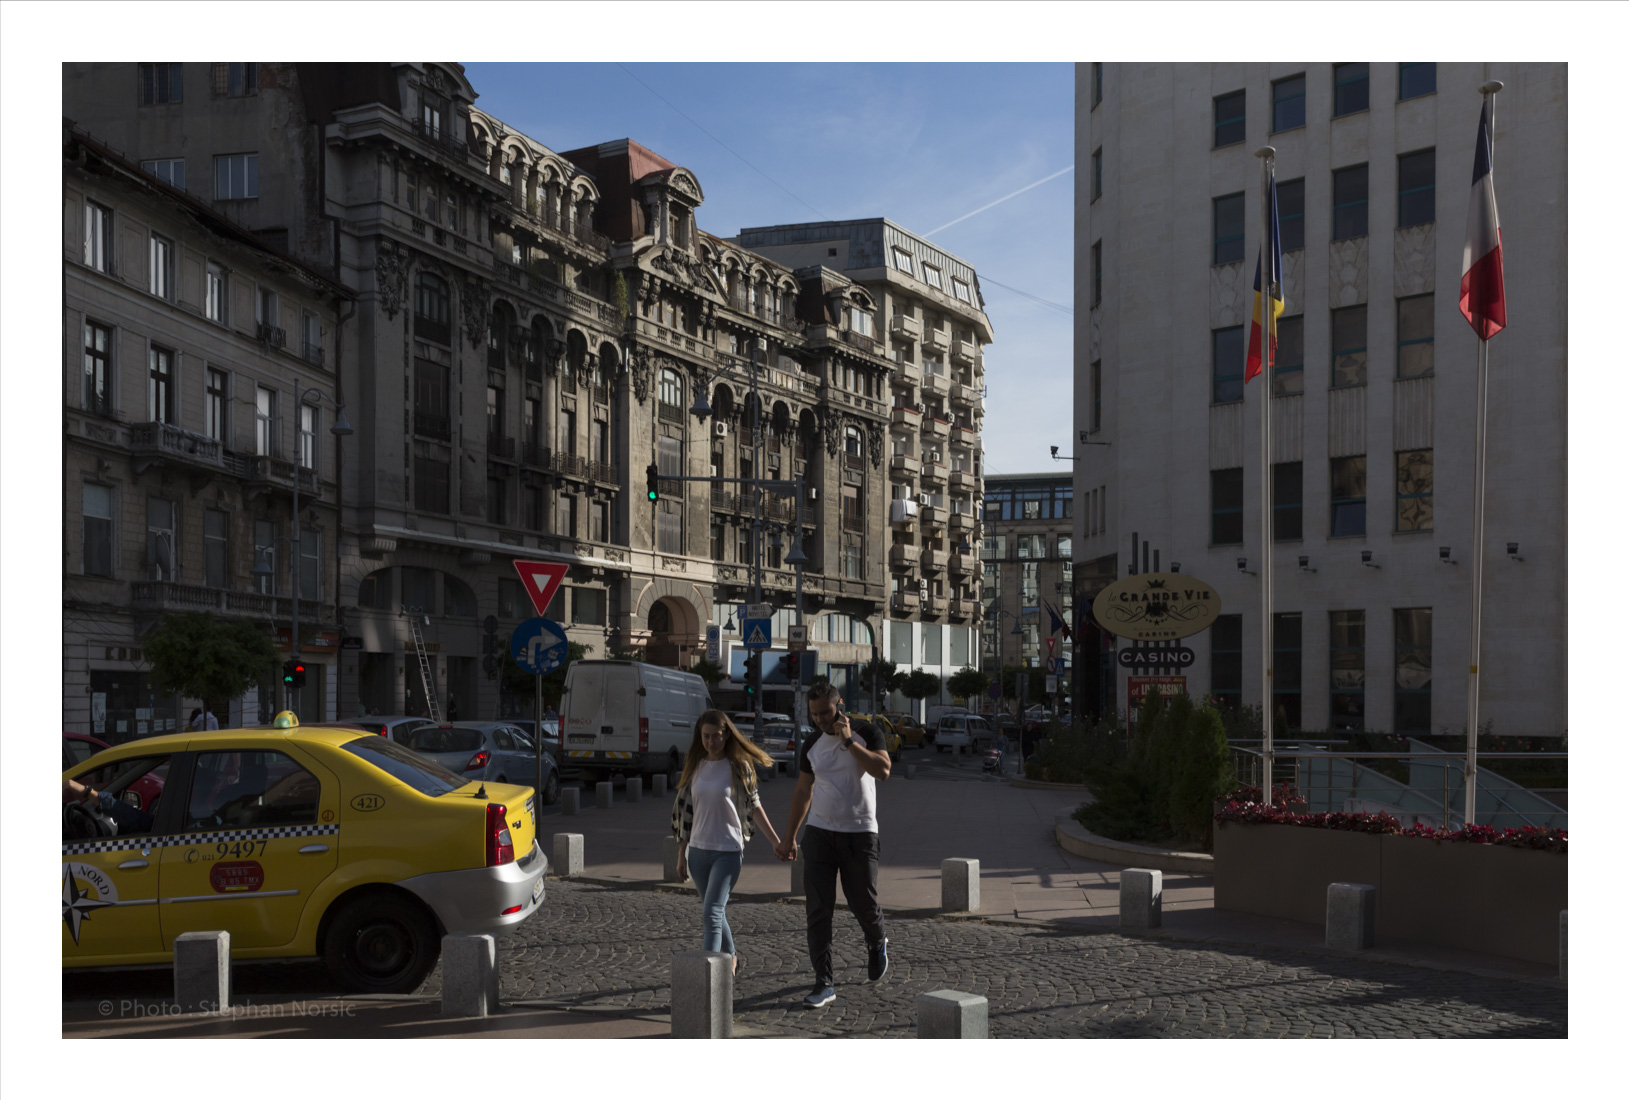 Roumanie - Regard sur Bucarest - Ceausescu plu trente - Stephan Norsic photoqraphe